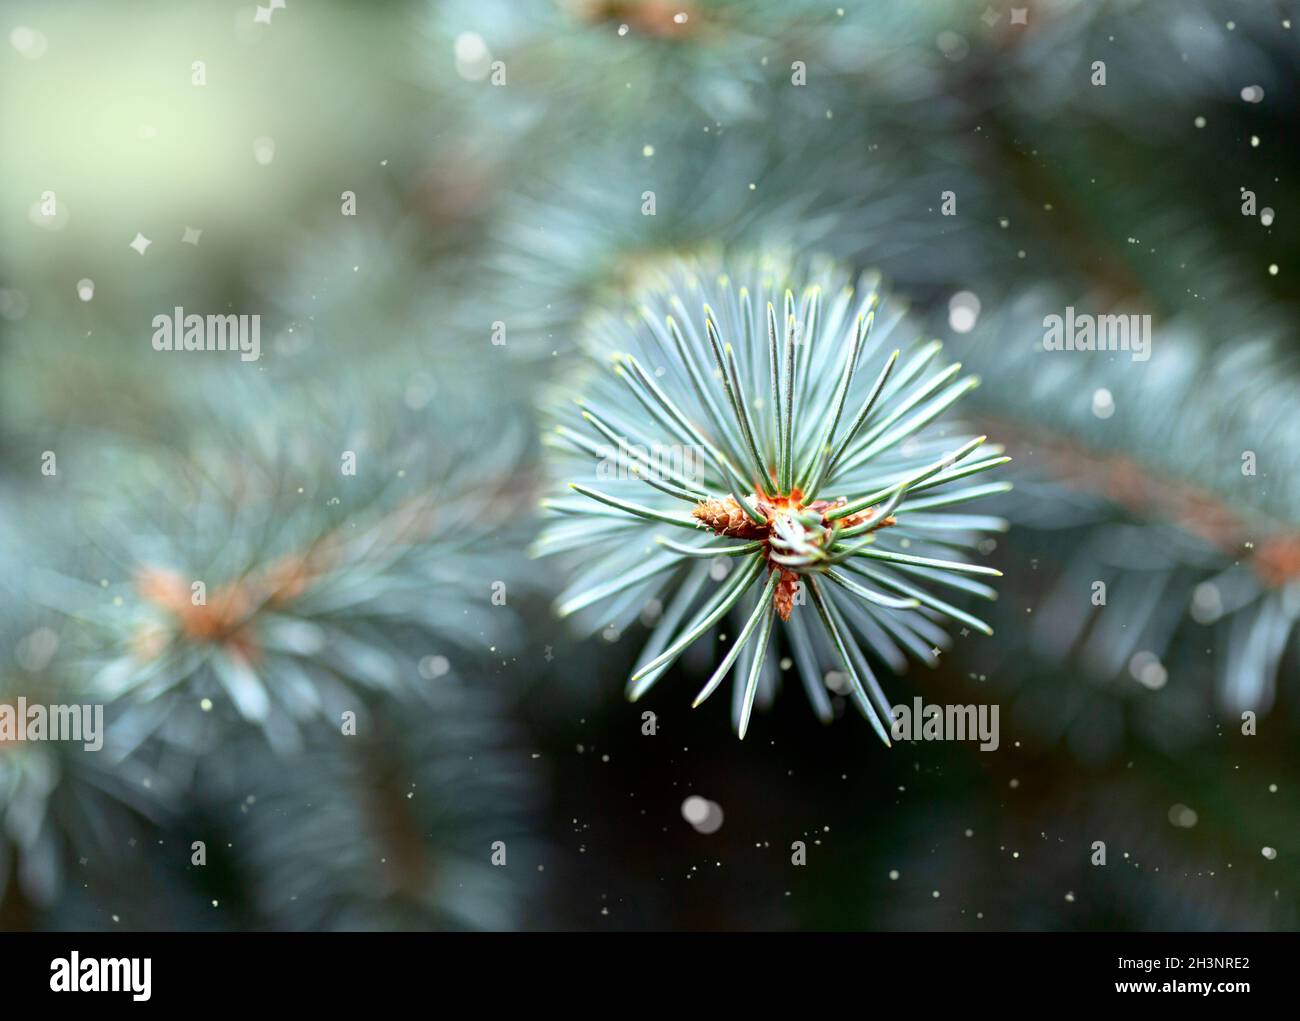 Winter pine branch.Christmas card. Stock Photo